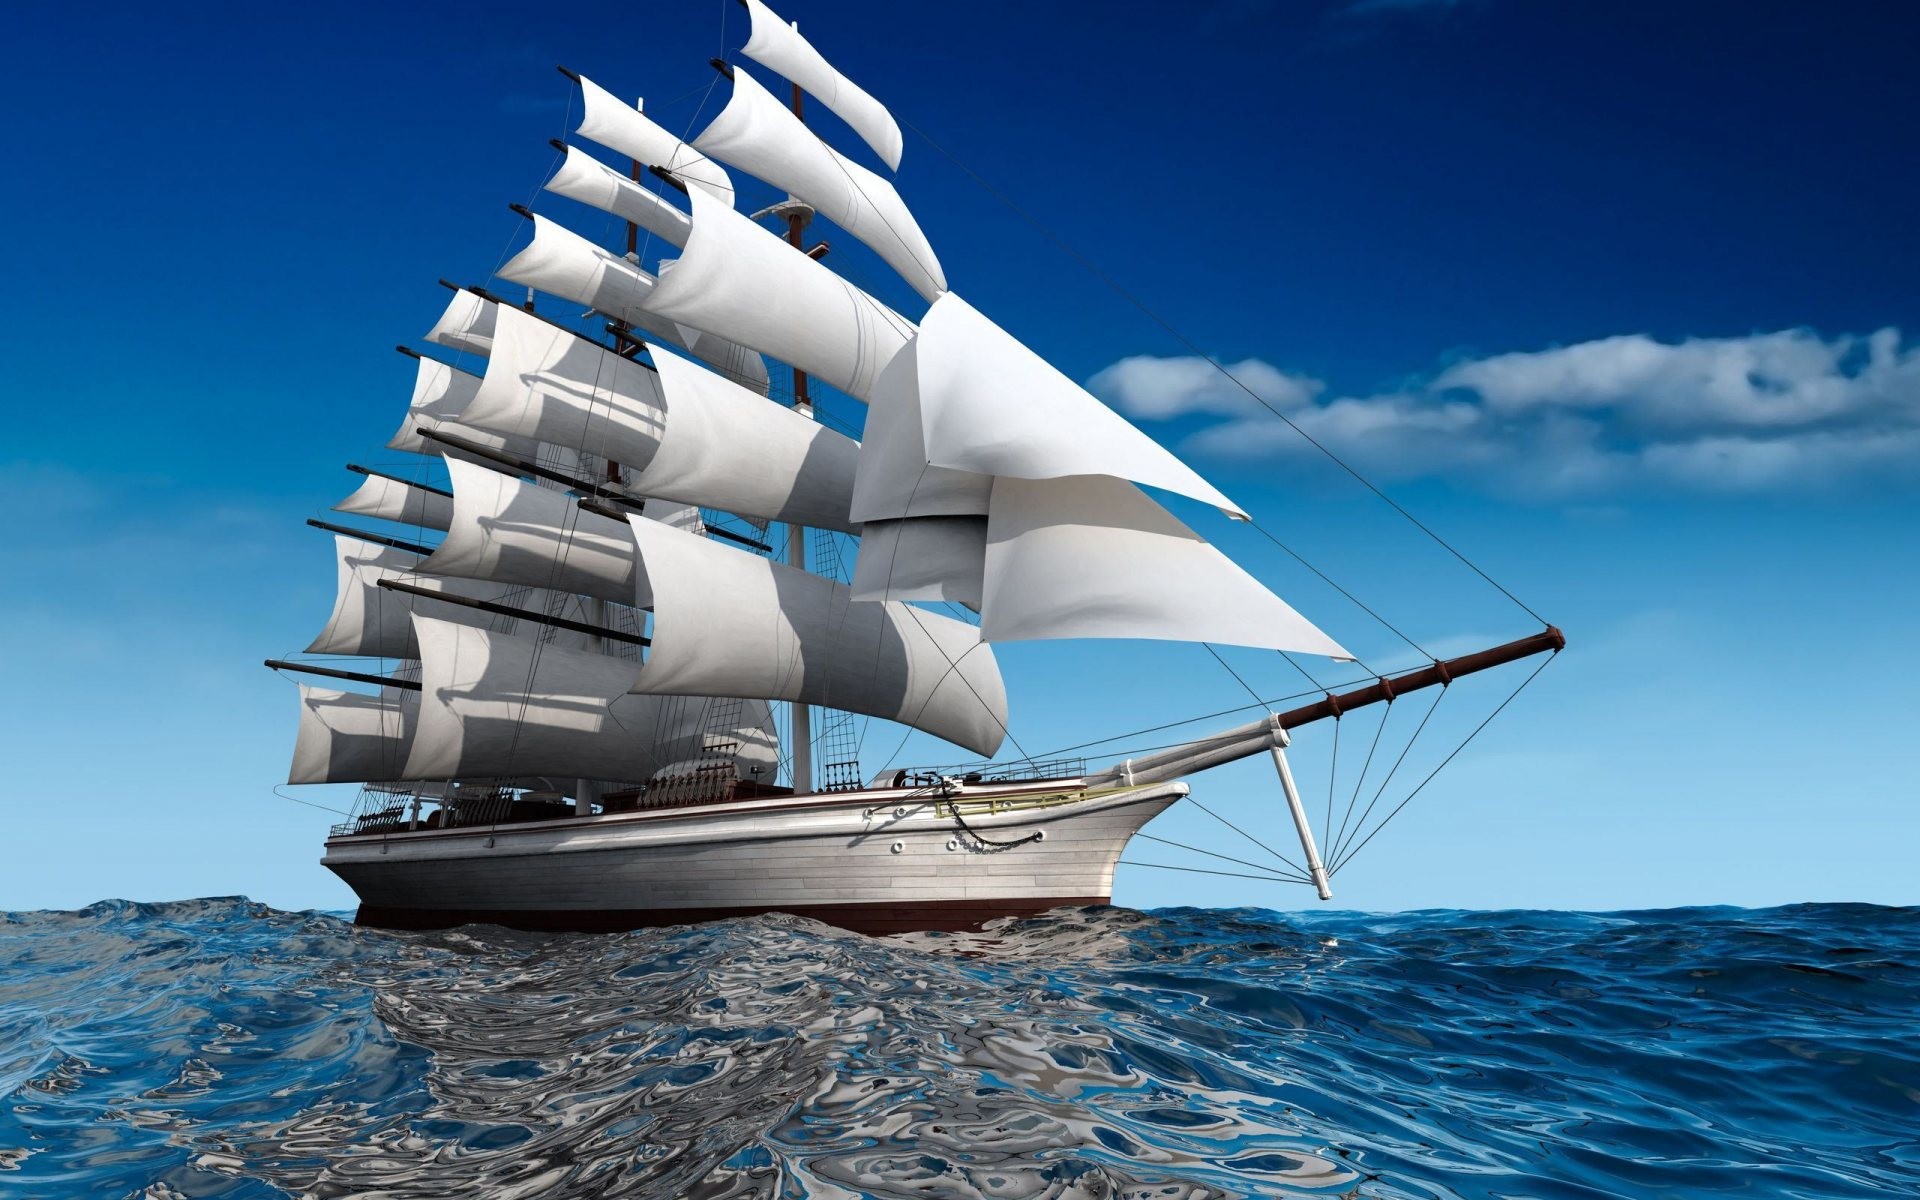 1920x1200 Desktop Images of Sailing Ships by Hylda Dallosso